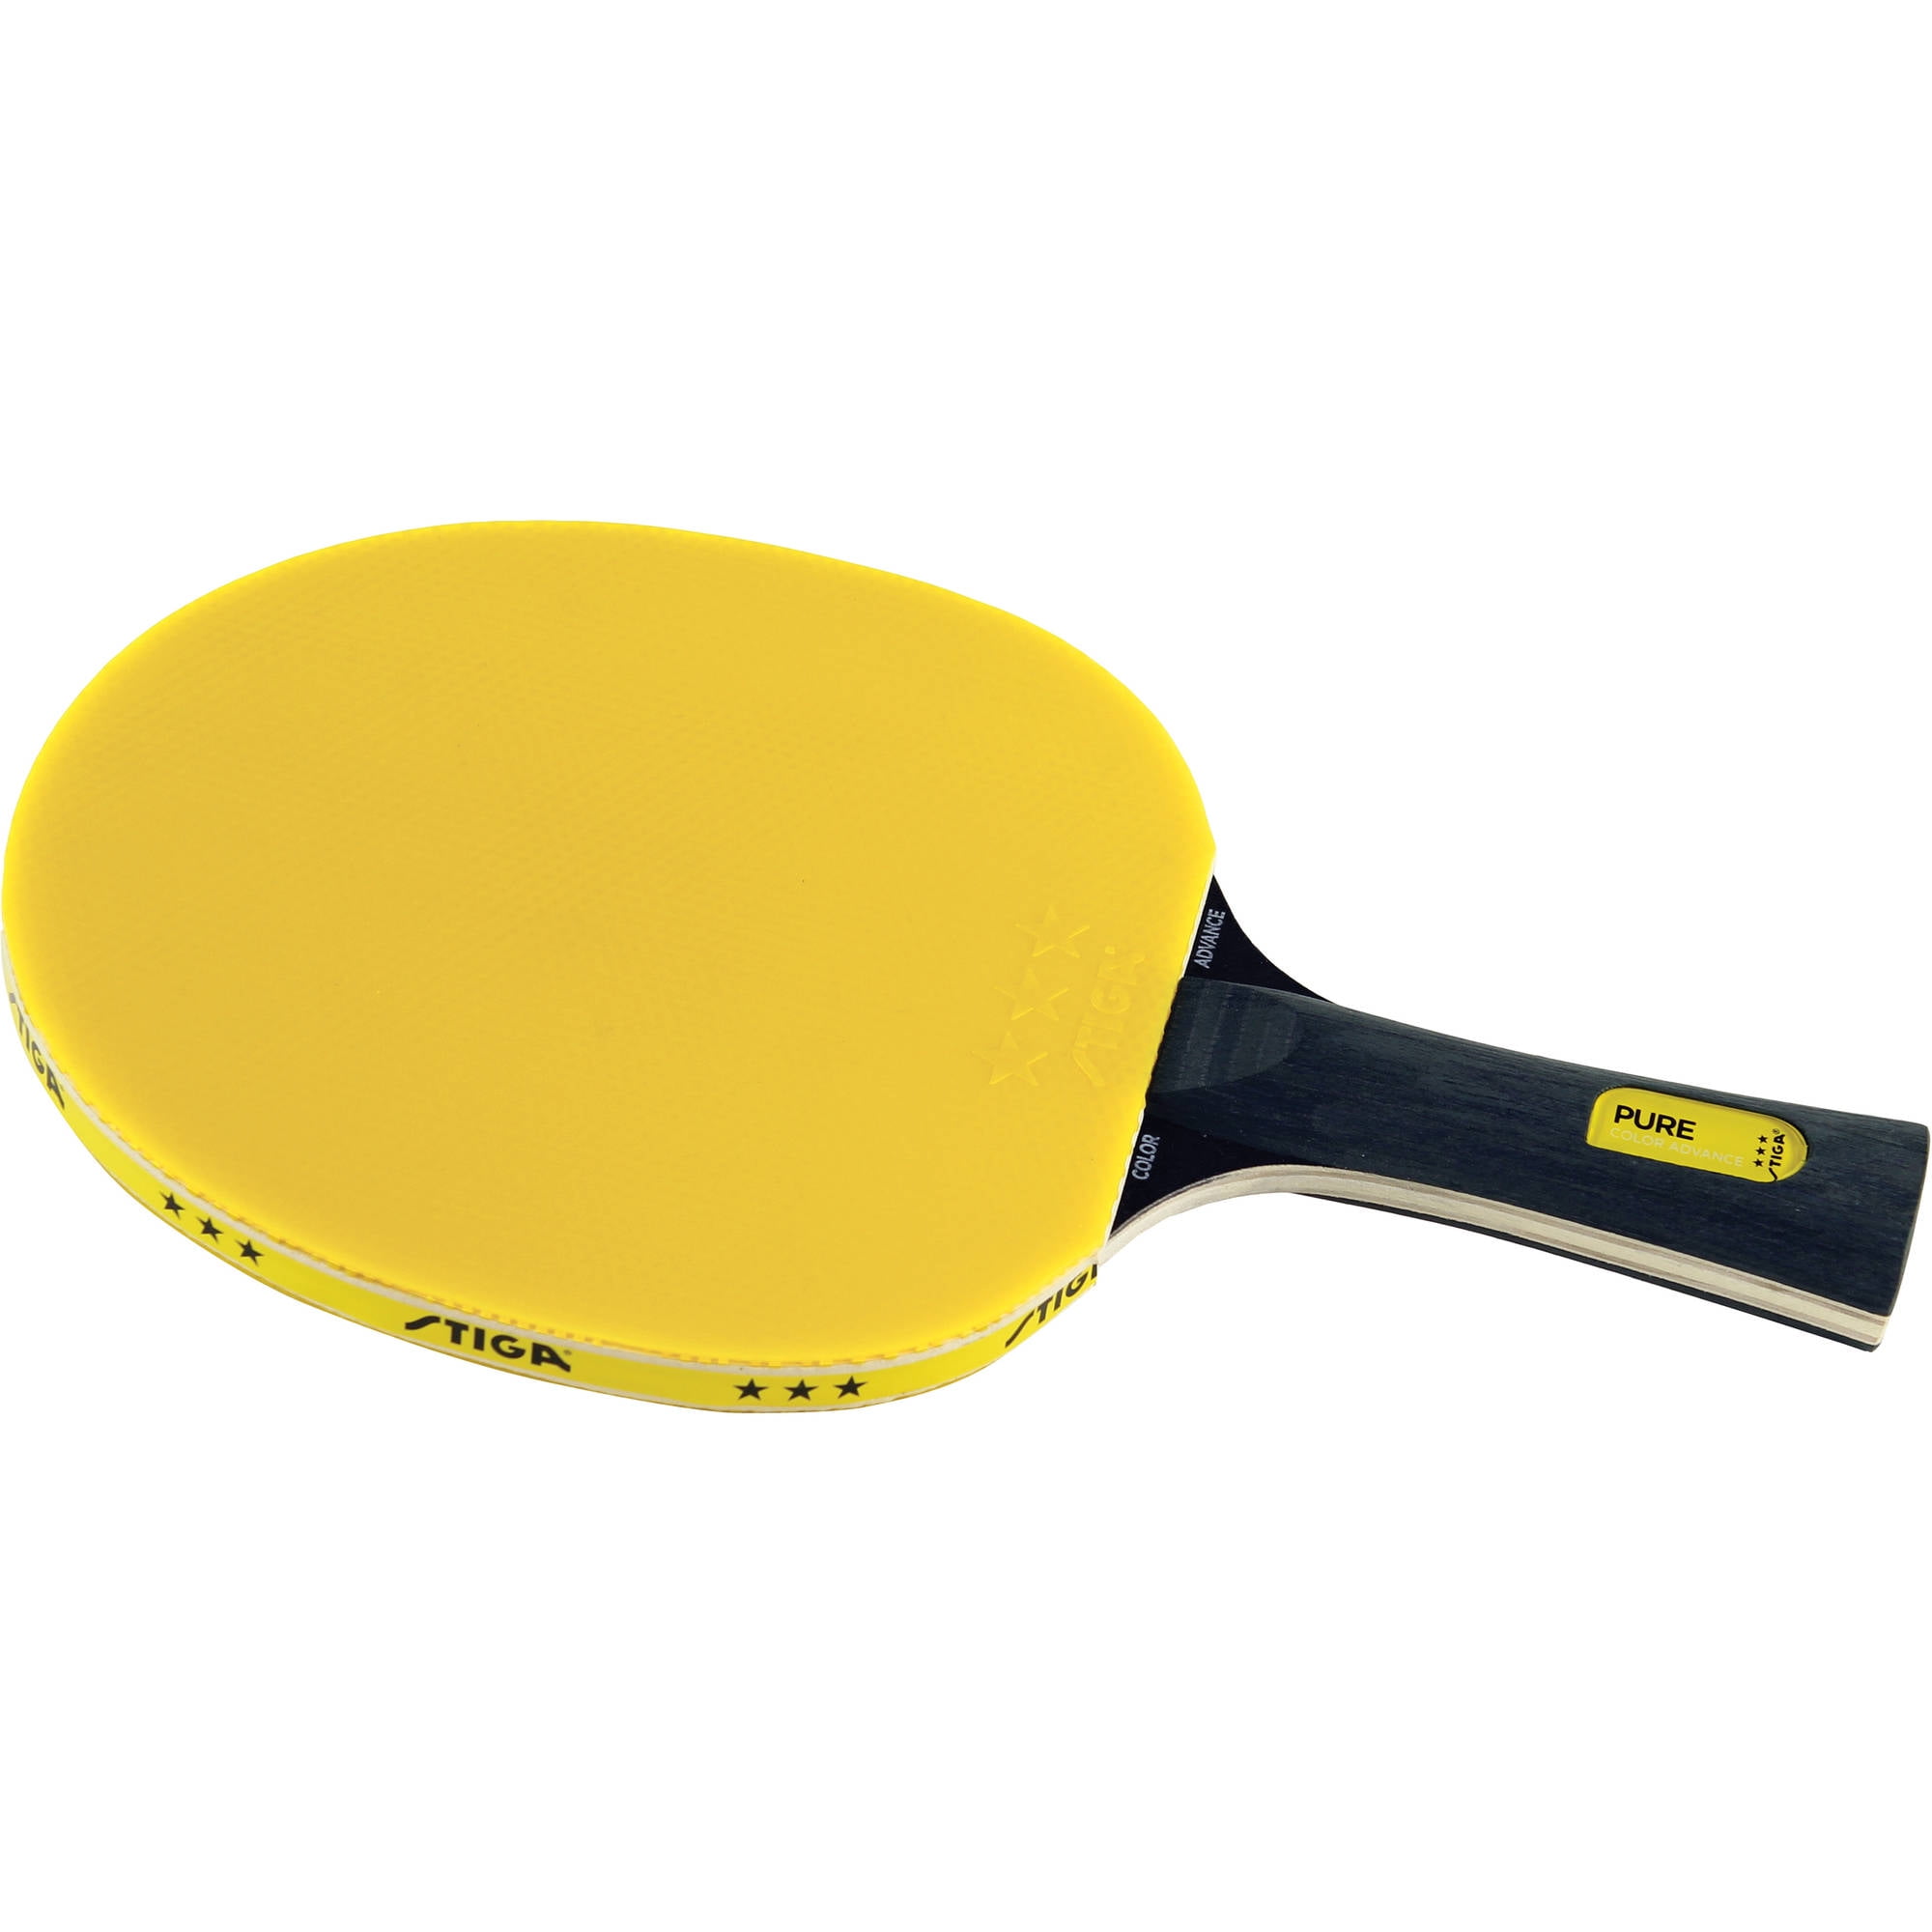 Details about   STIGA Pure Color Advance Table Tennis Racket 